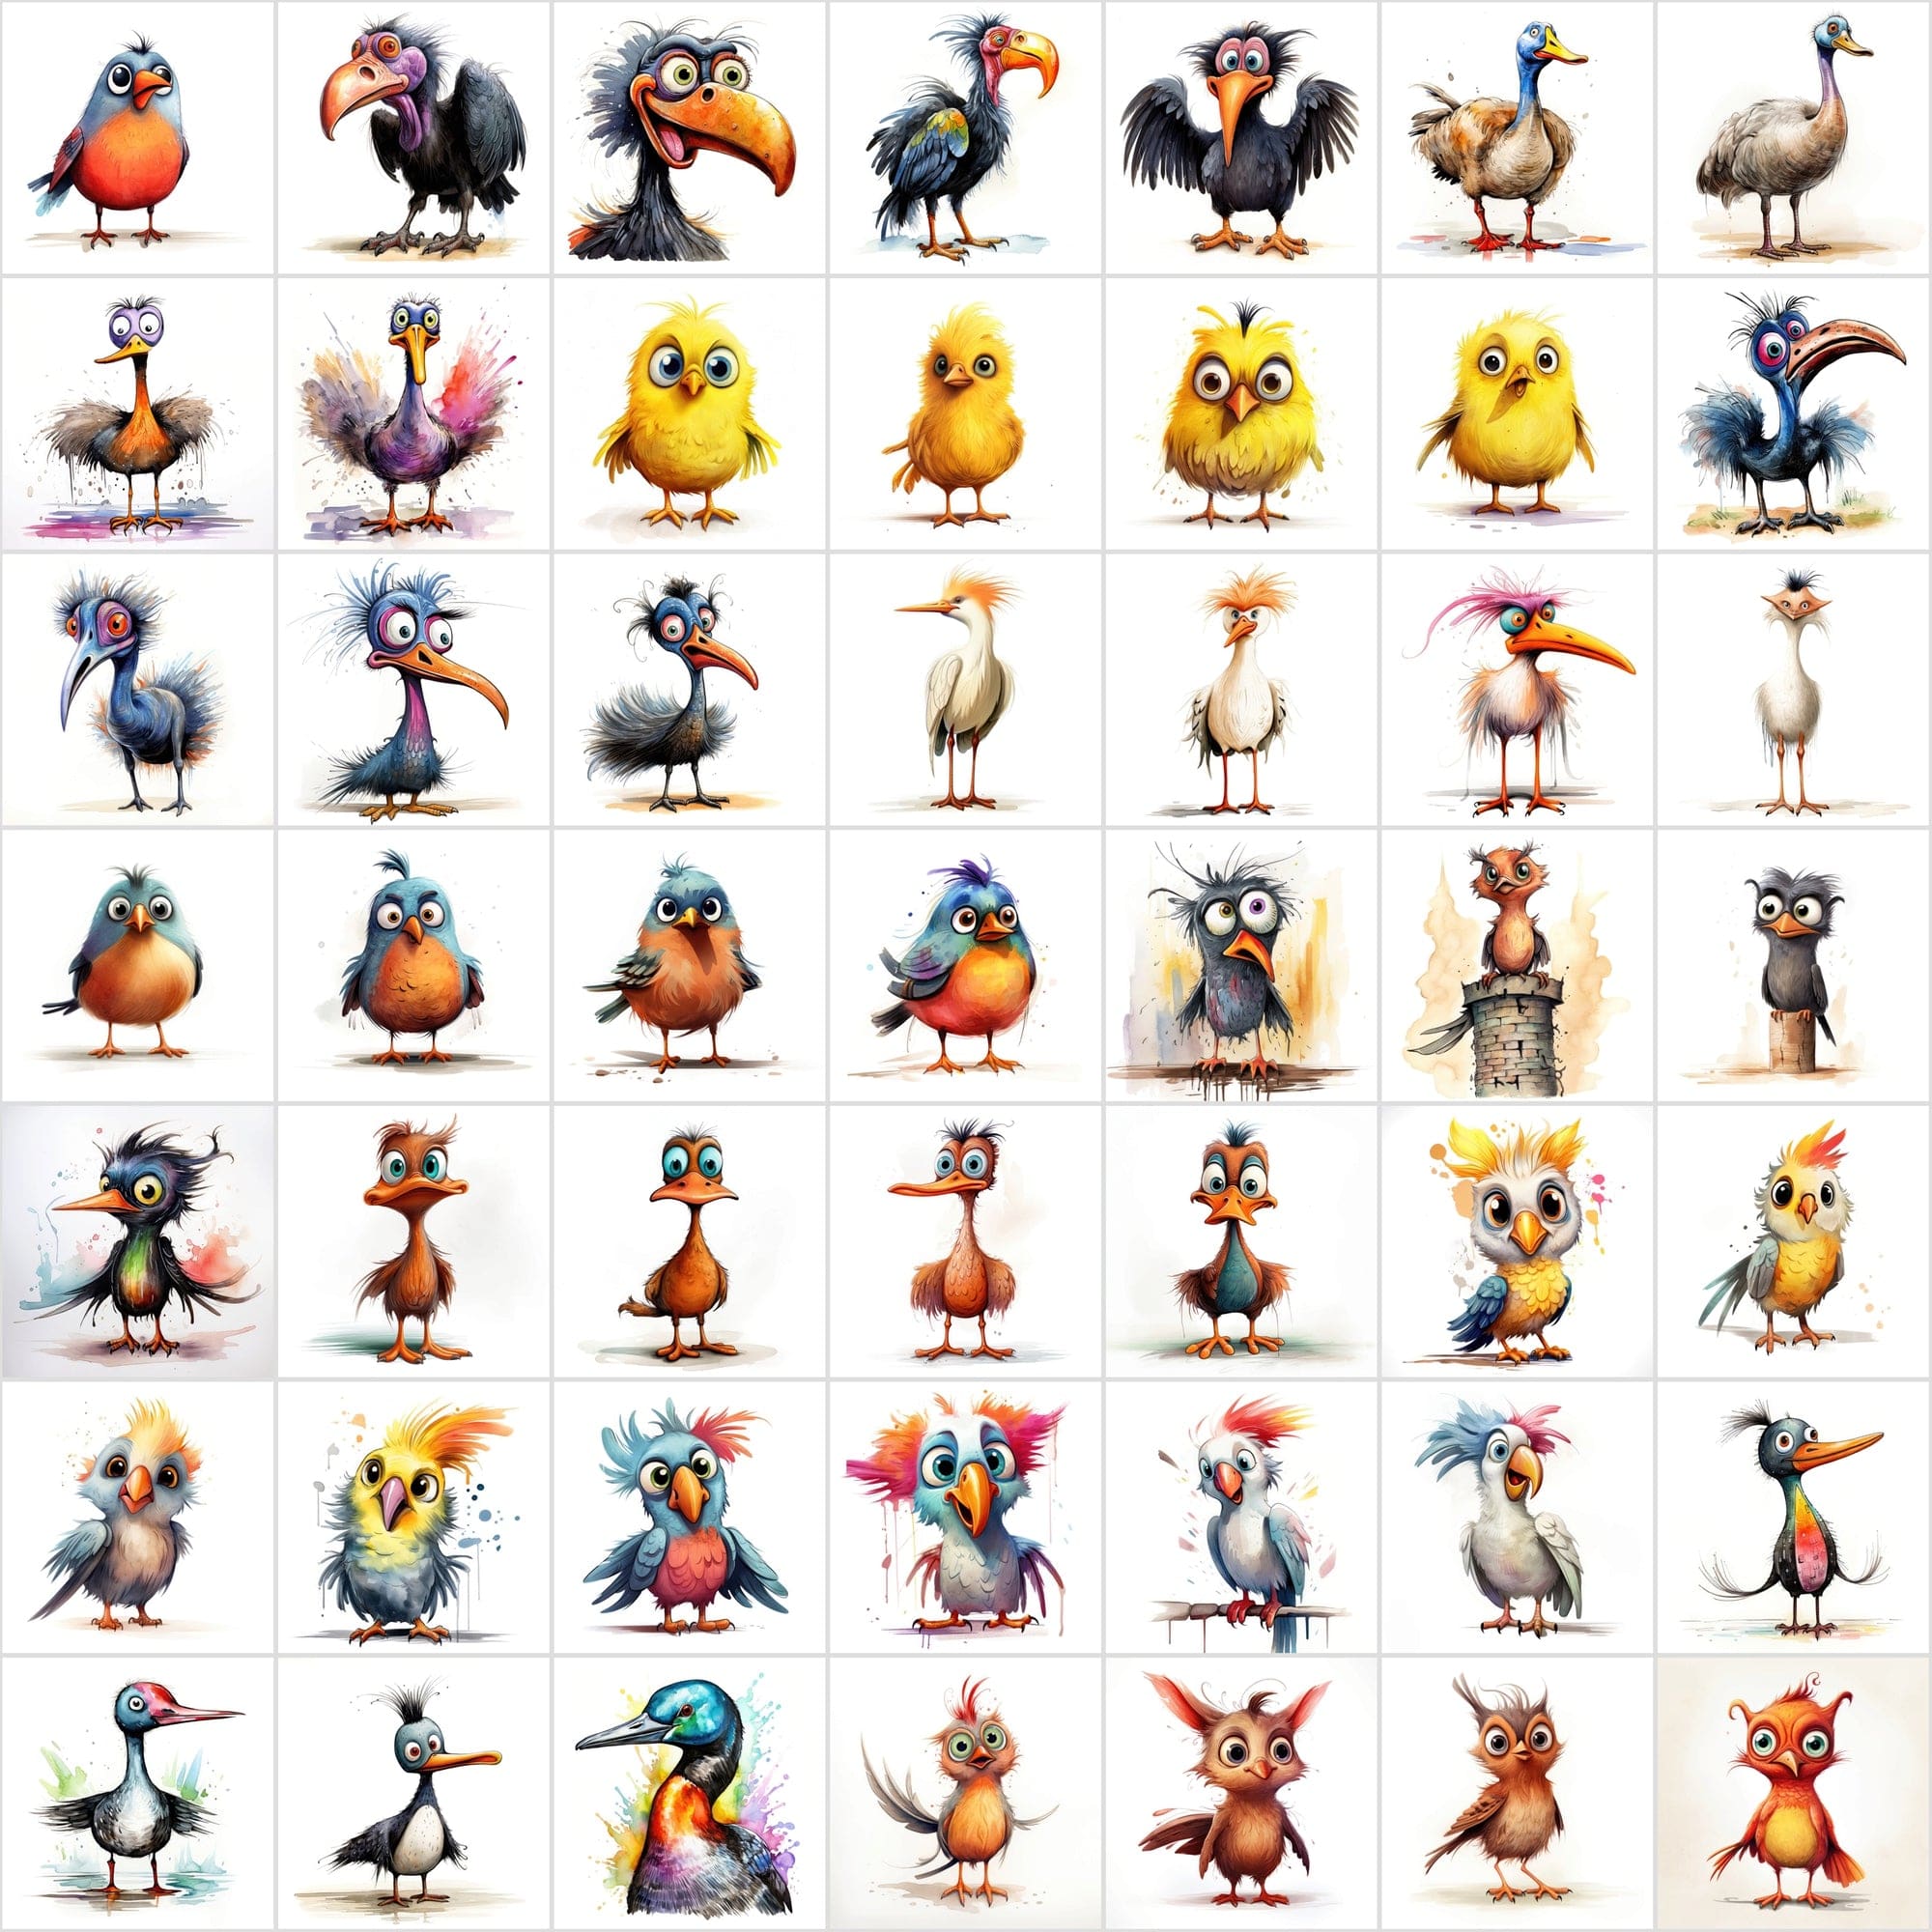 Colorful Birds with Big Eyes: 590 JPG & PNG Images – Funny Look Digital Download Sumobundle